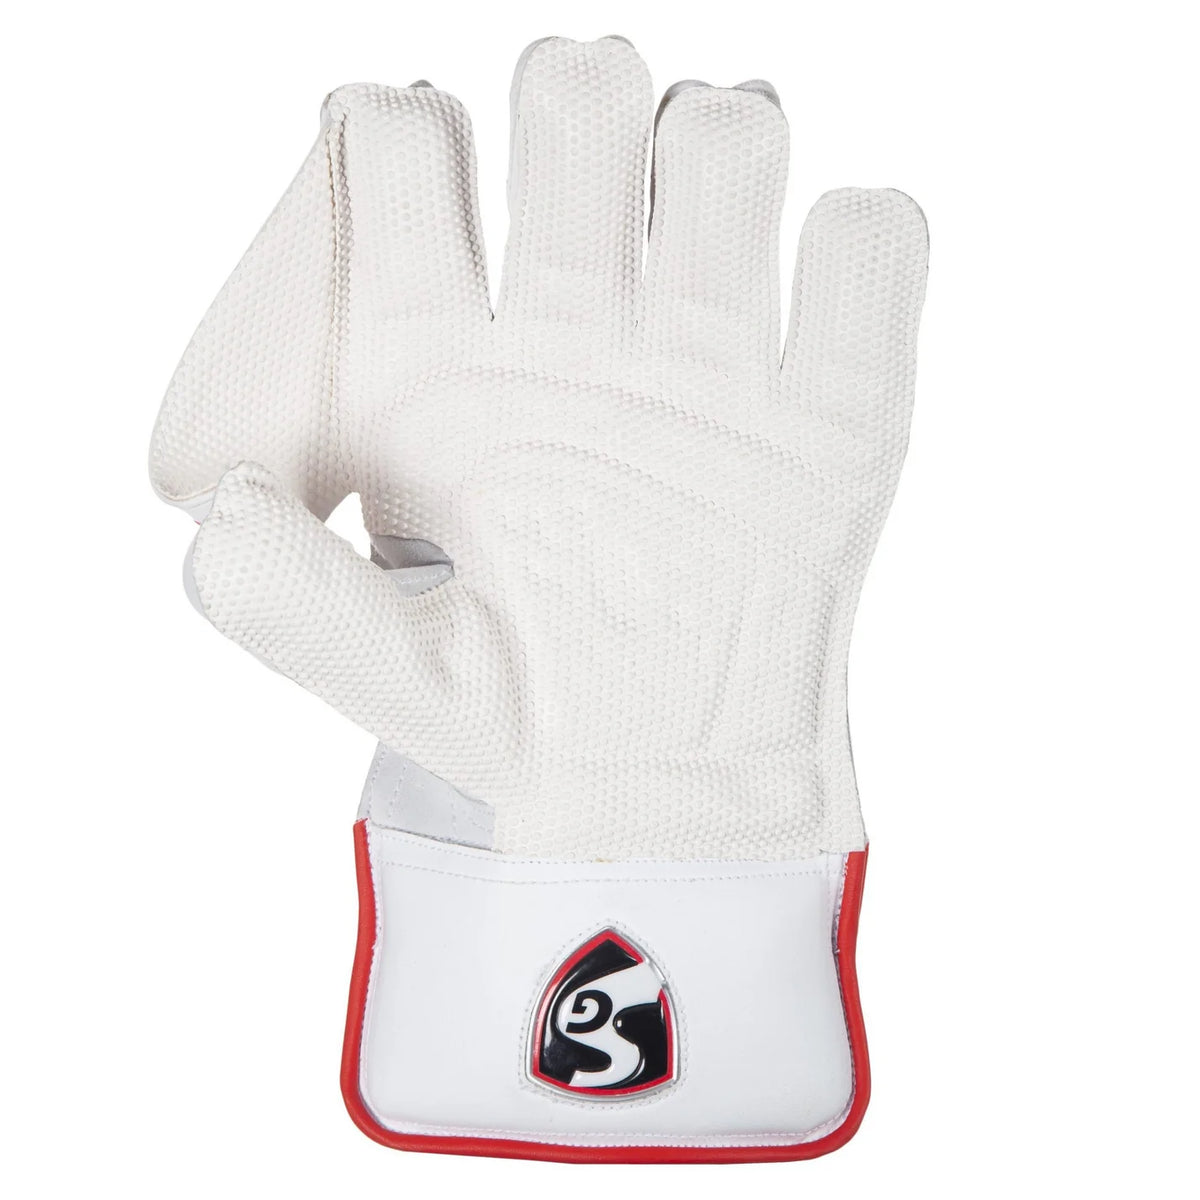 Pre-Order SG Super Club Wicket Keeping Gloves (Multi-Color) W.K. Gloves